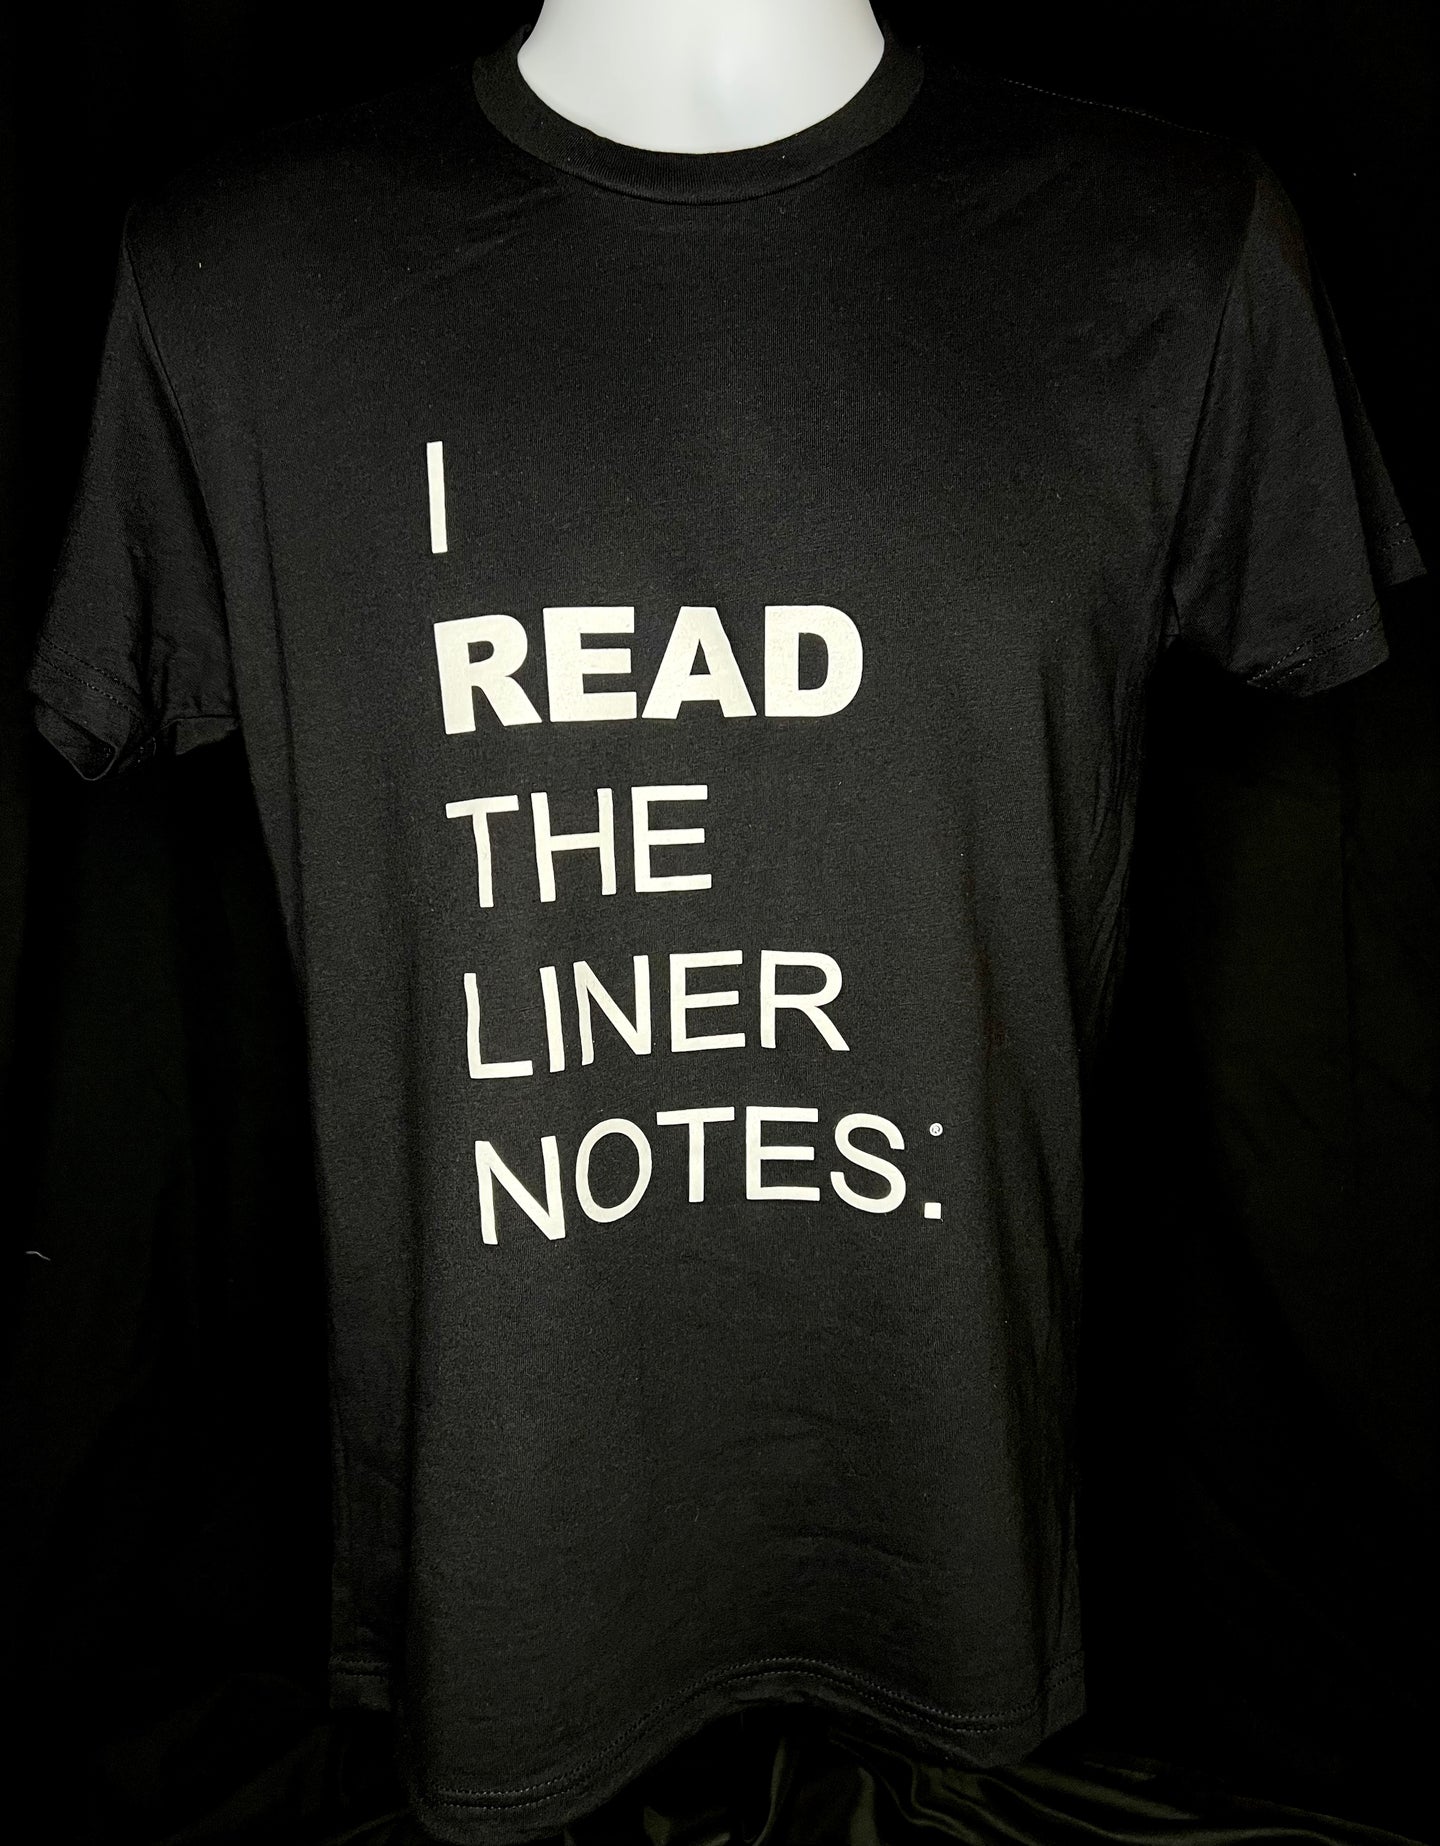 I Read The Liner Notes.® - Black T-Shirt (Men's/Women's)